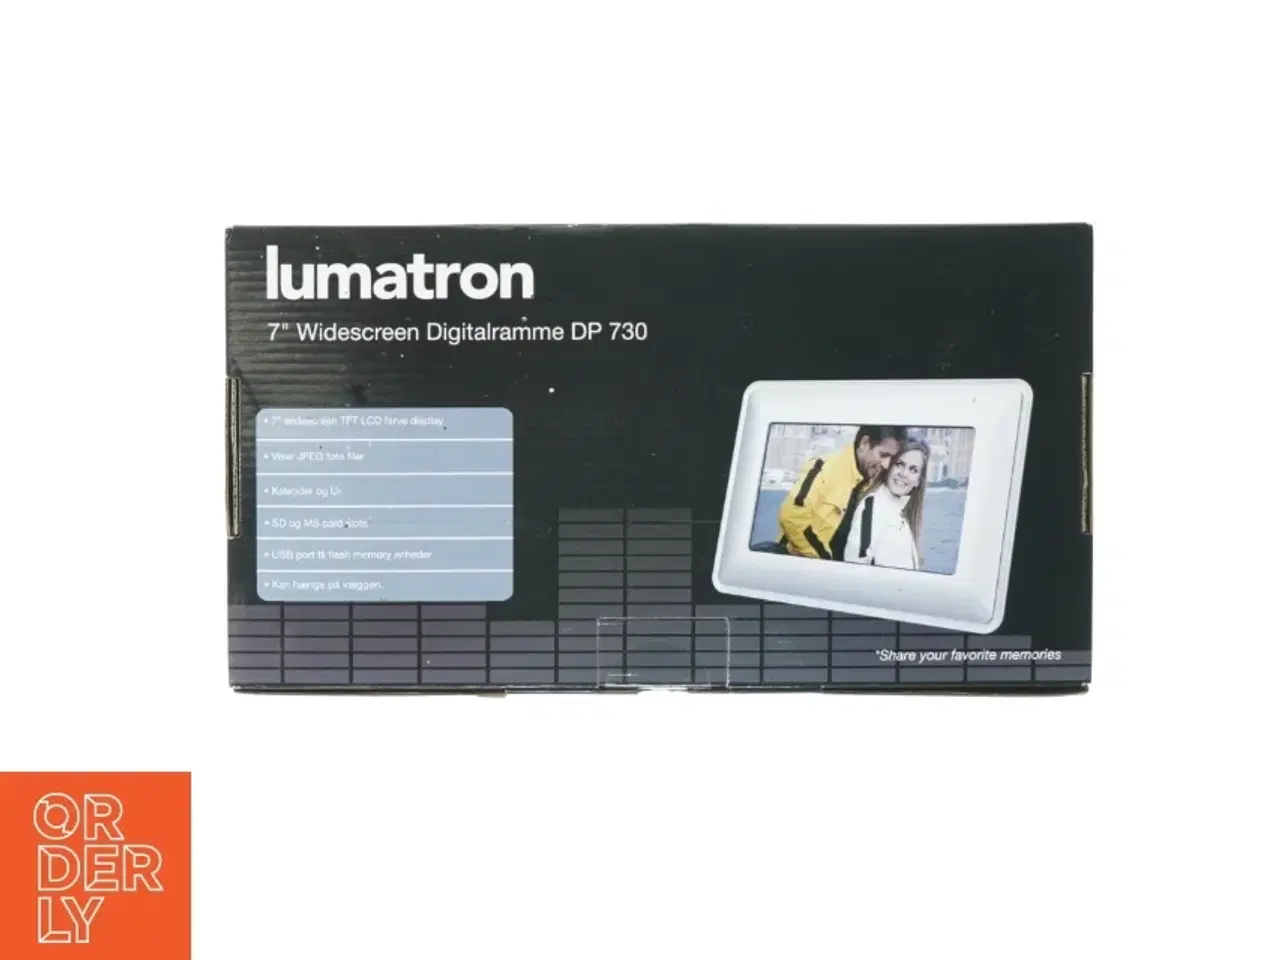 Billede 1 - Lumatron digital ramme fra Ellen Umatron (str. 32 x 18 cm)